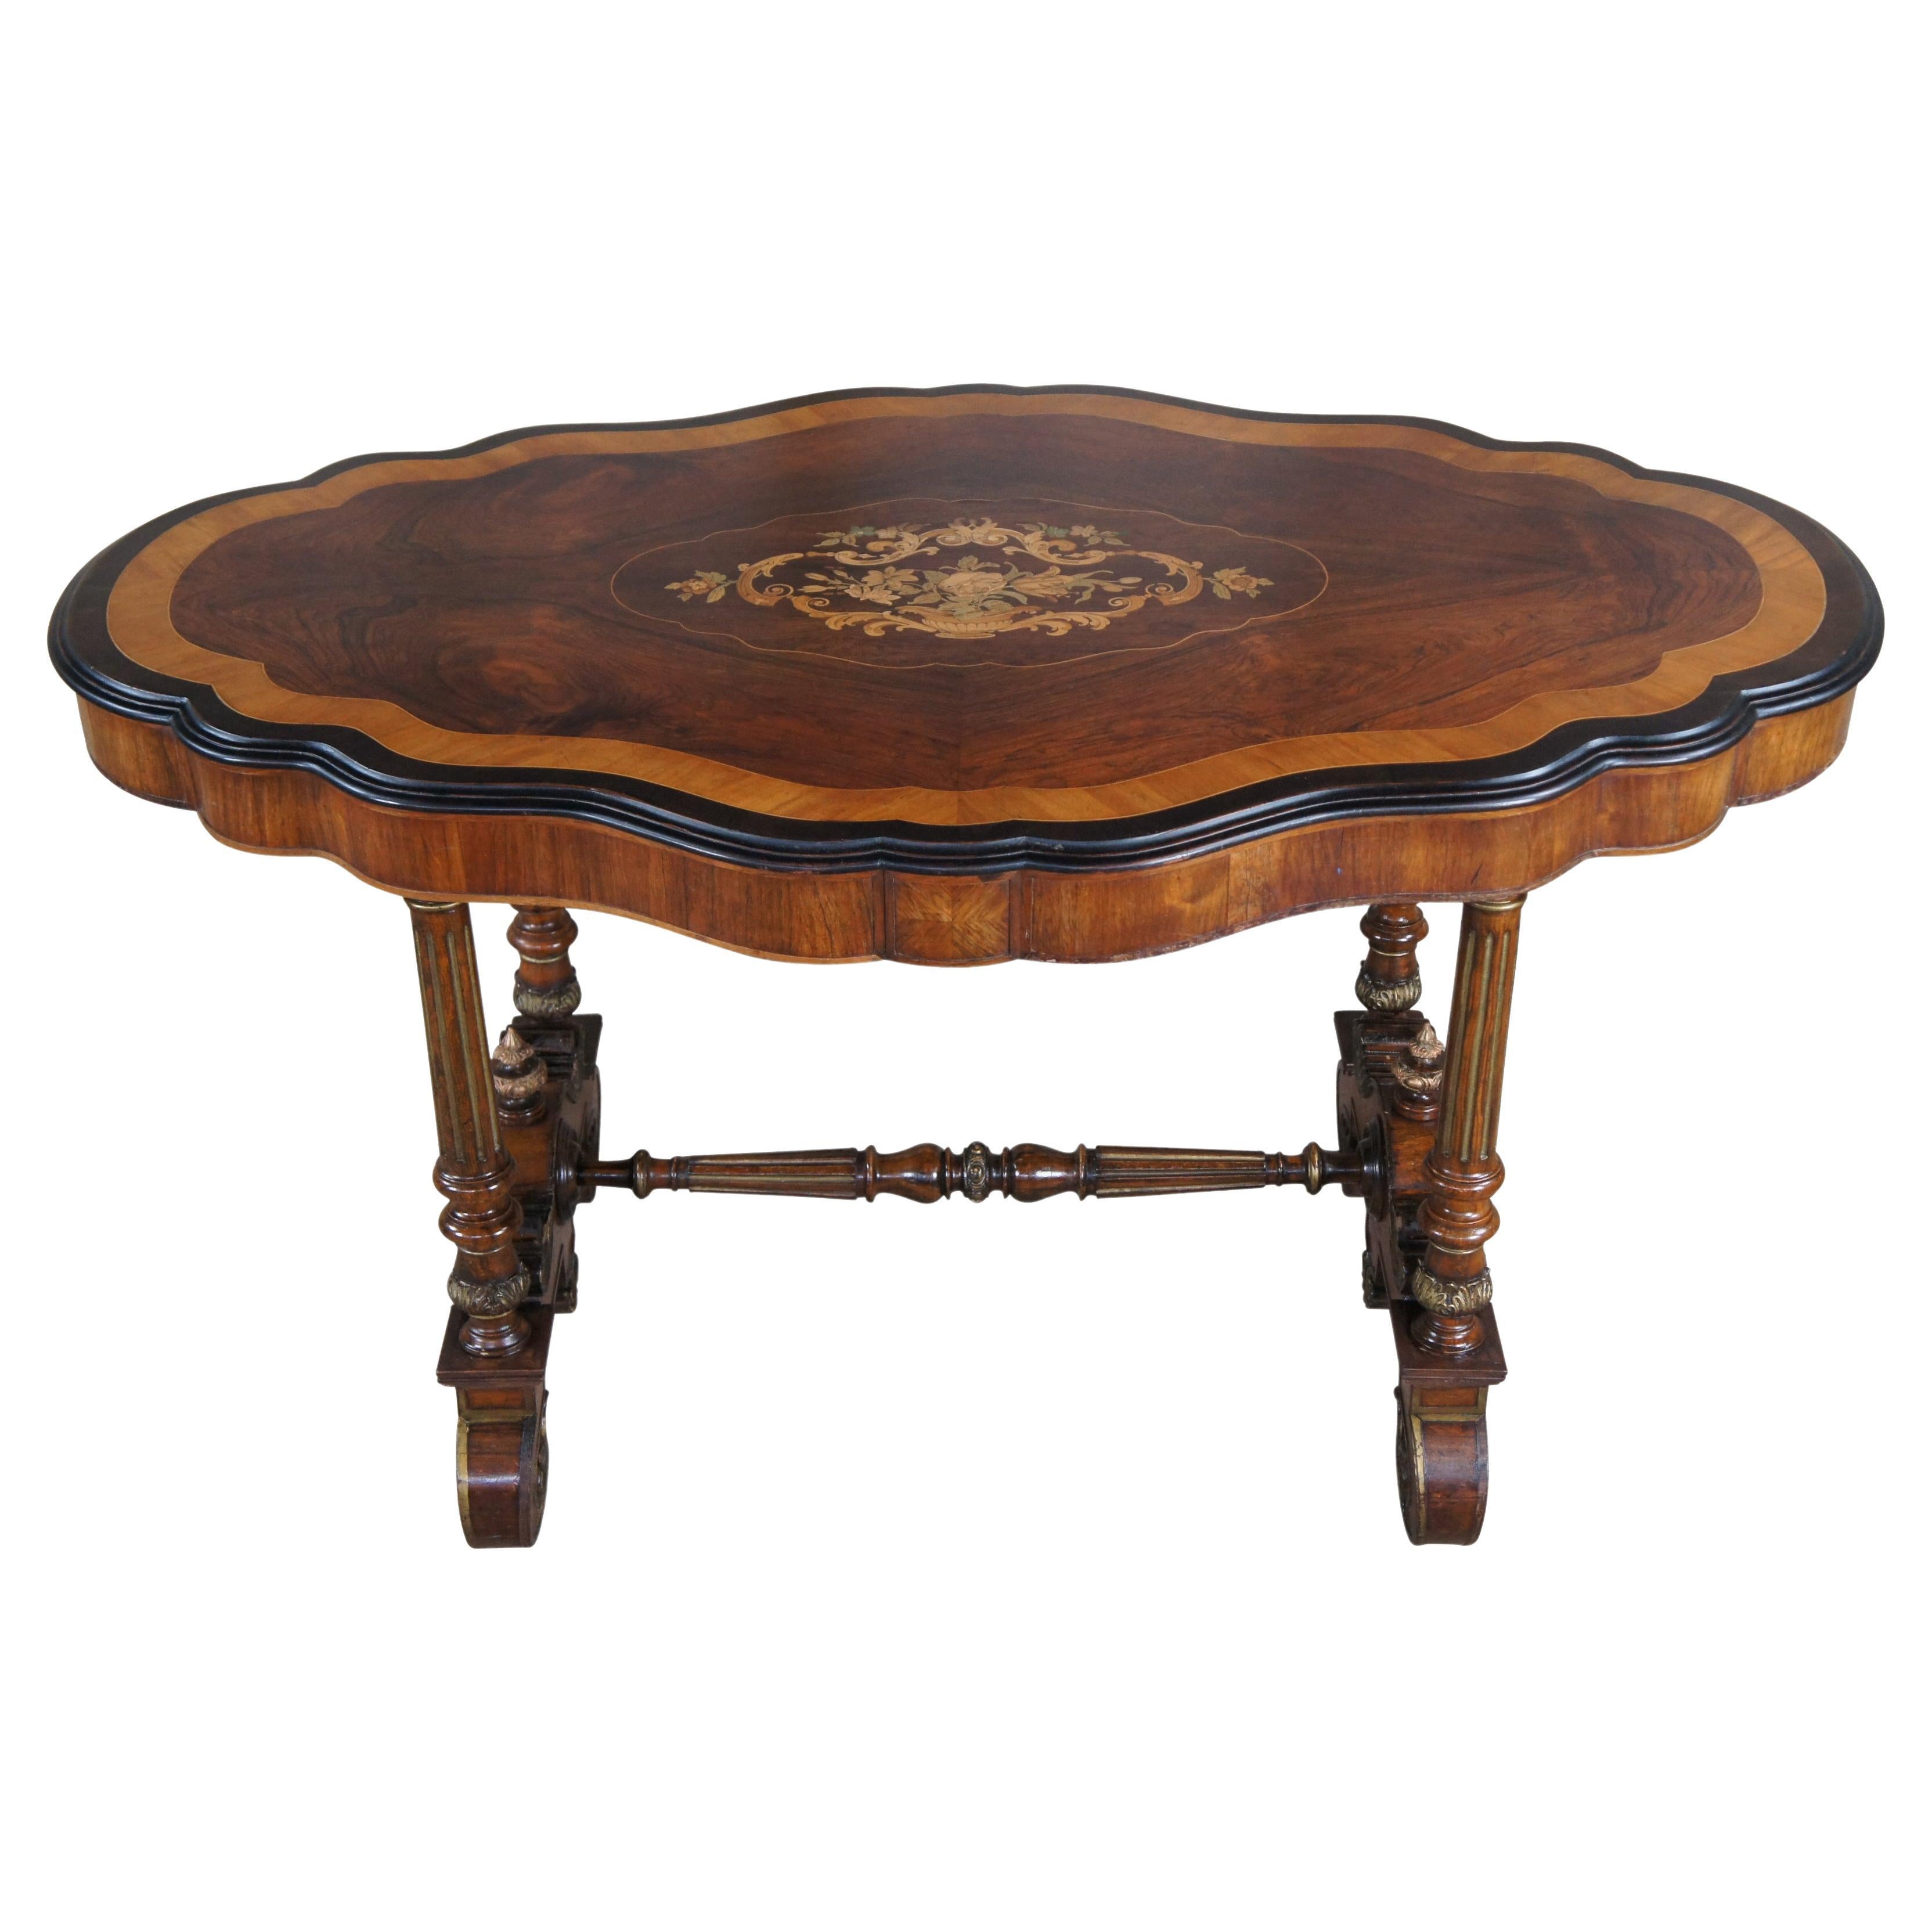 Antique American Renaissance Revival Serpentine Walnut Marquetry Center Table